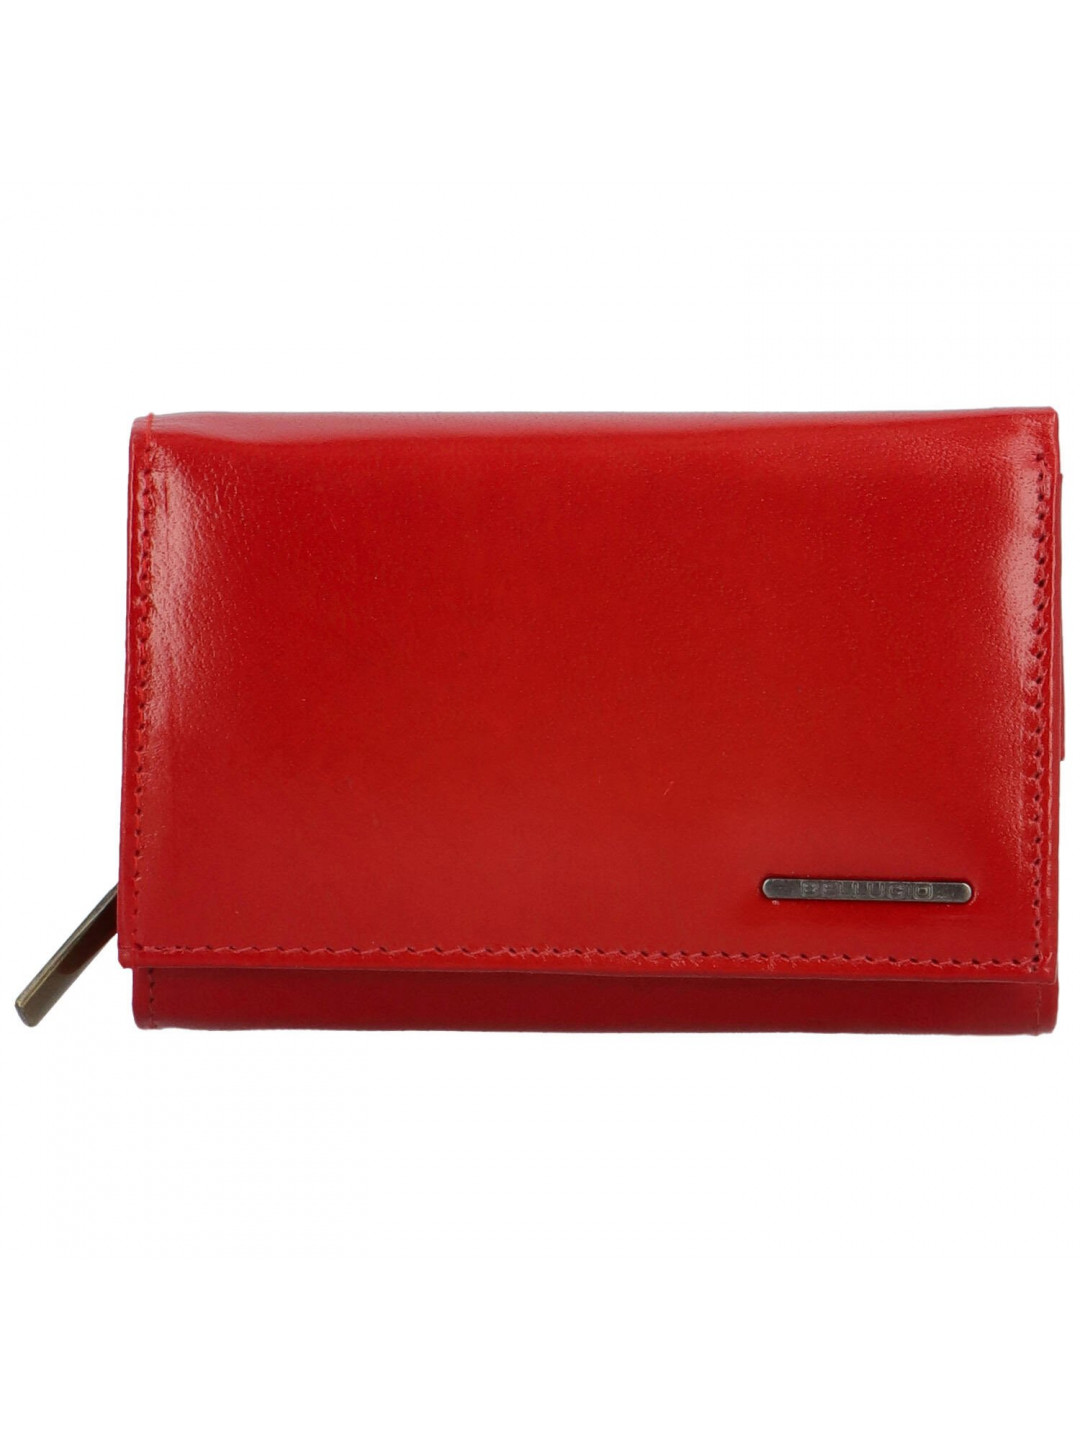 Dámská kožená peněženka červená – Bellugio Milada